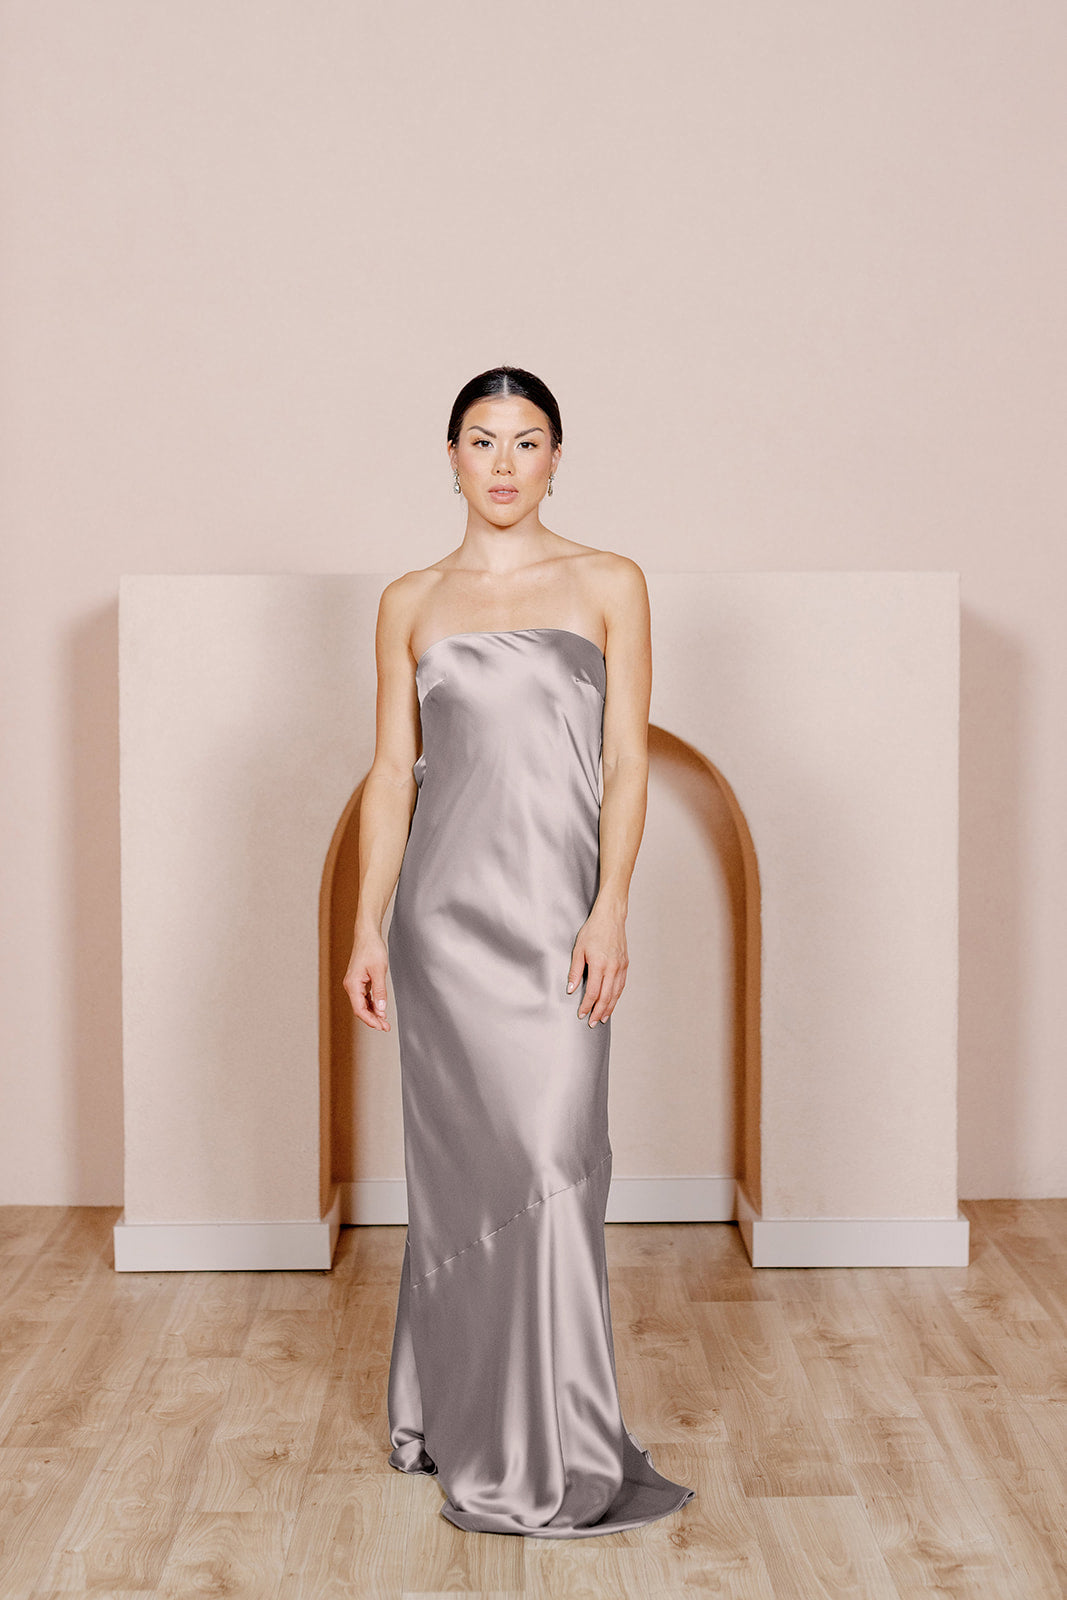 Leo Satin Dress | Made To Order